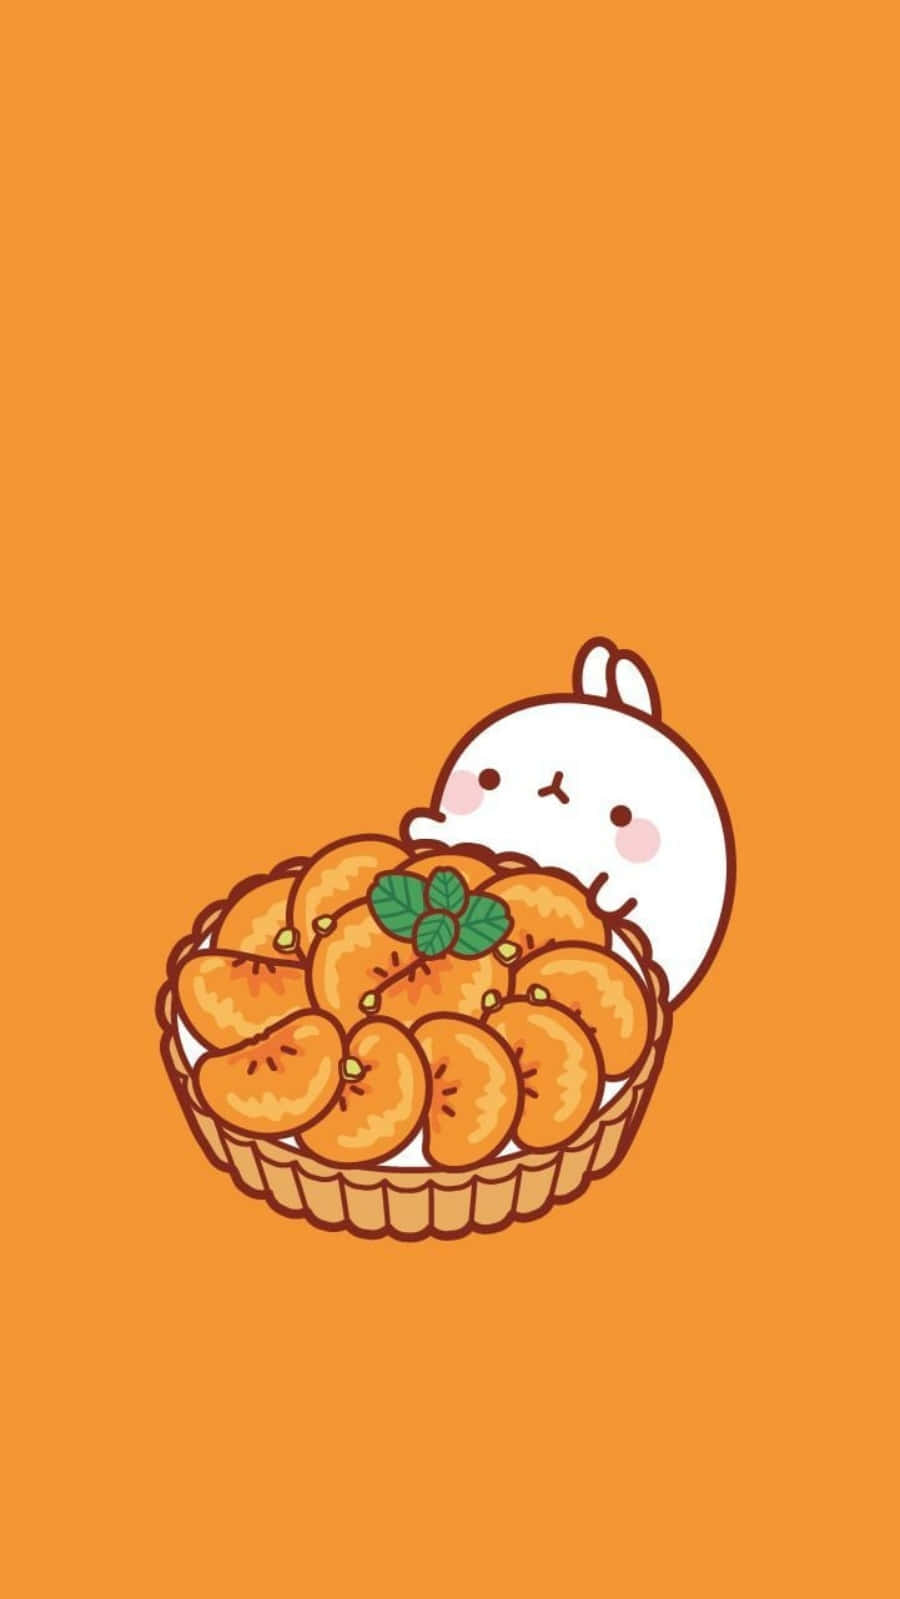 Cute Orange Molang Rabbit Holding Orange Slices Background